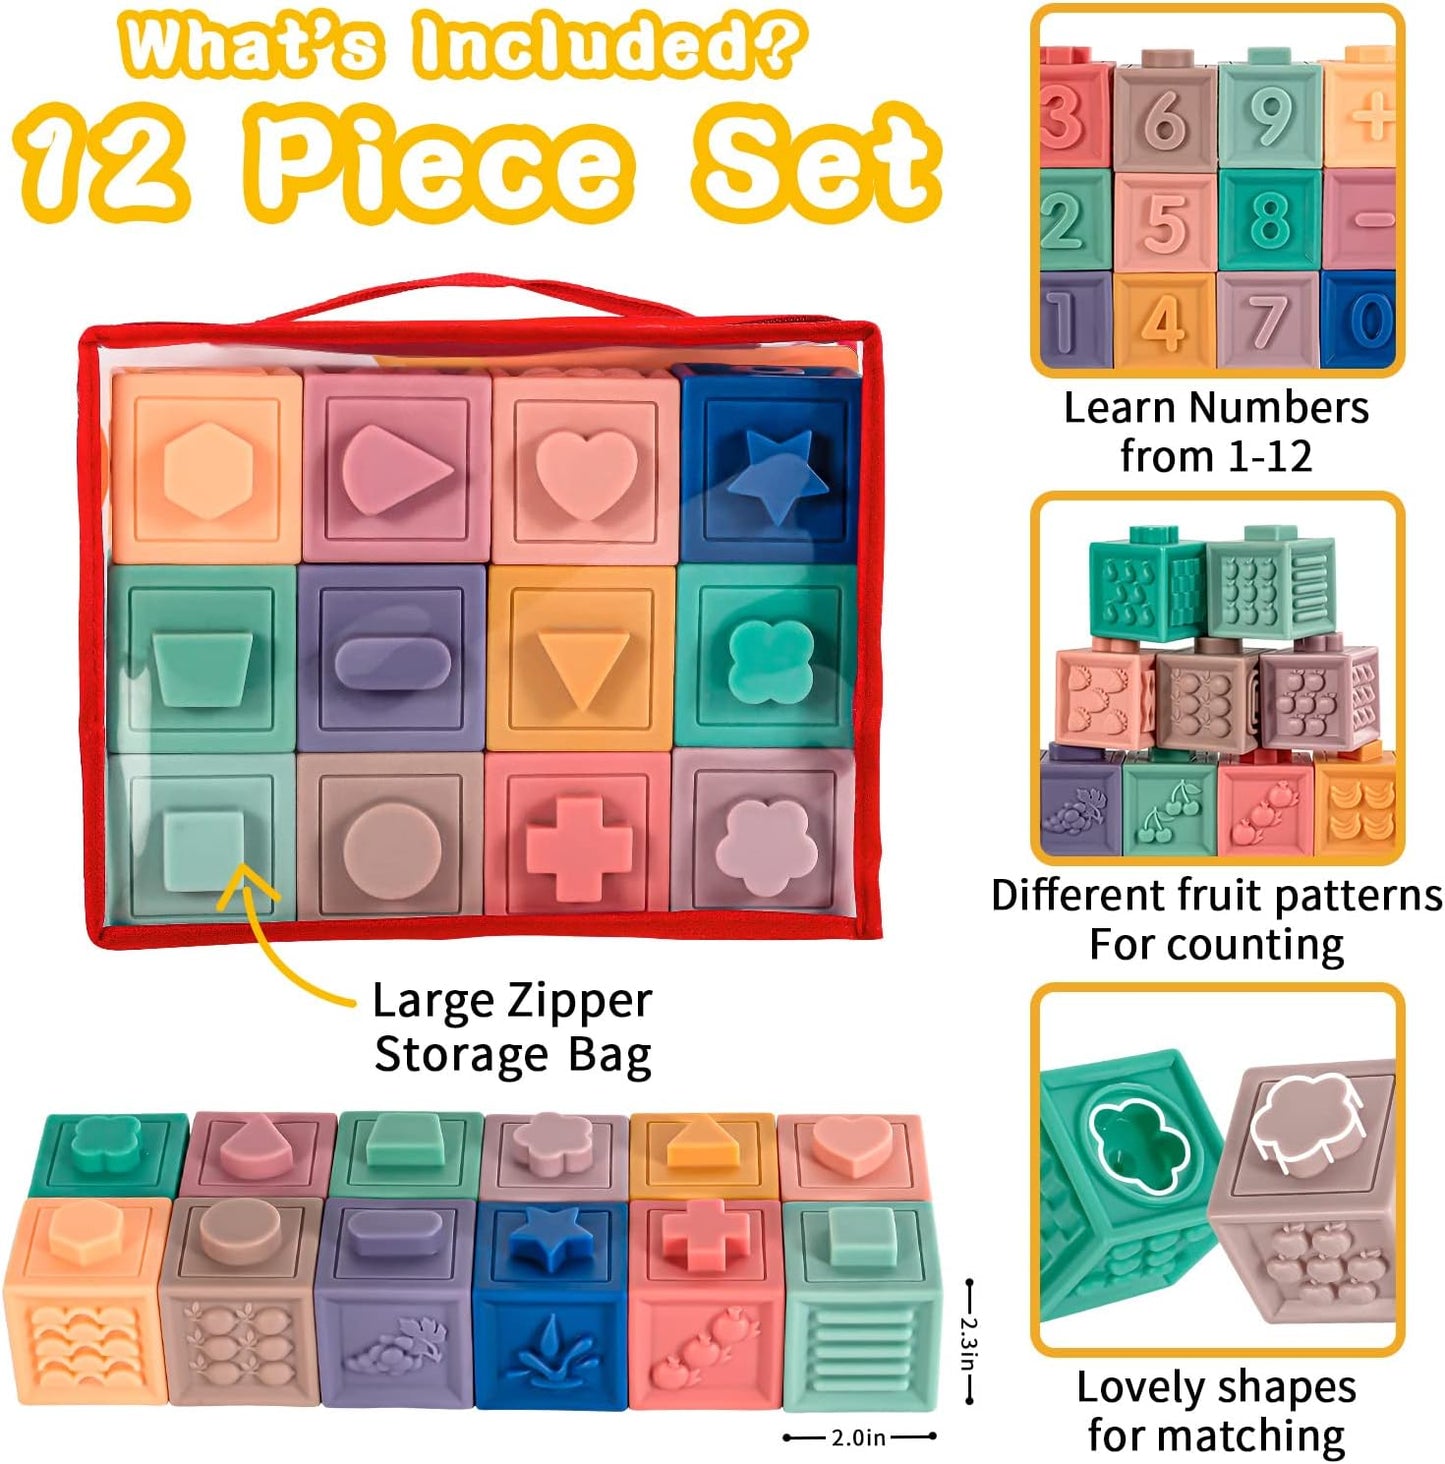 3-in-1 Montessori Toys 🧸 Soft Teething + Stacking Blocks 🏗️ Sensory Fun! 23 PCS for 0-18 Months